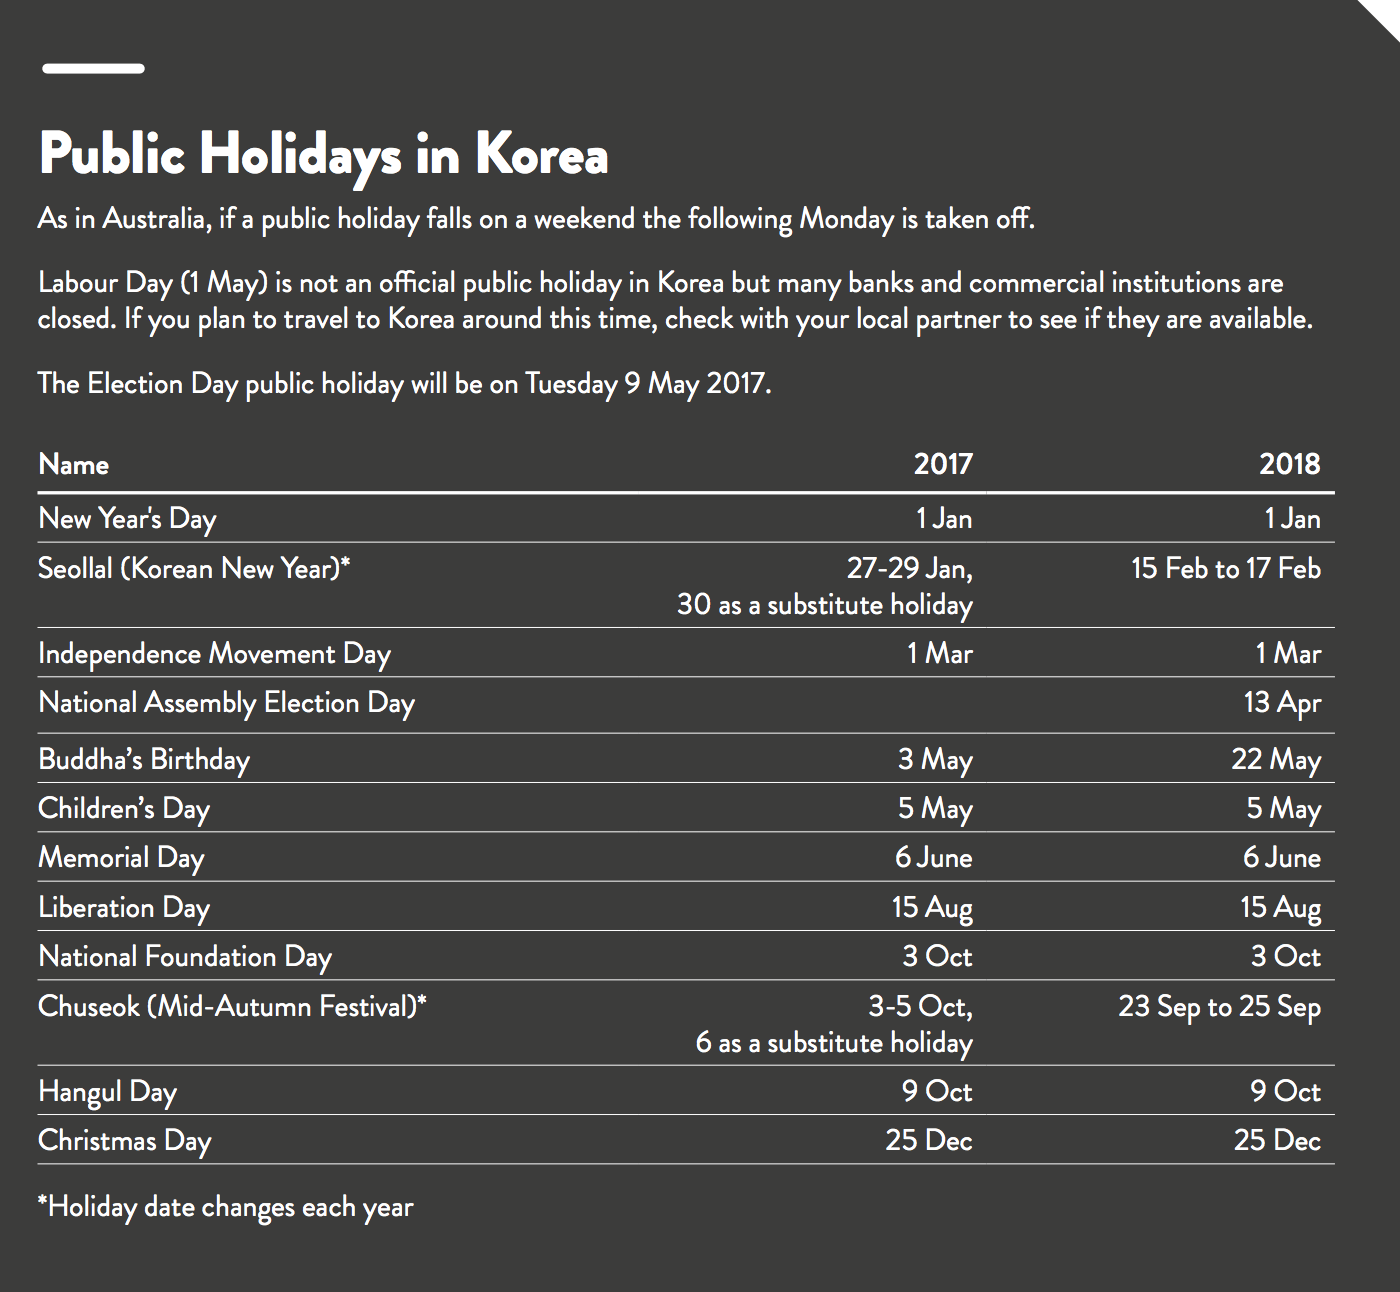 Public holidays in Korea